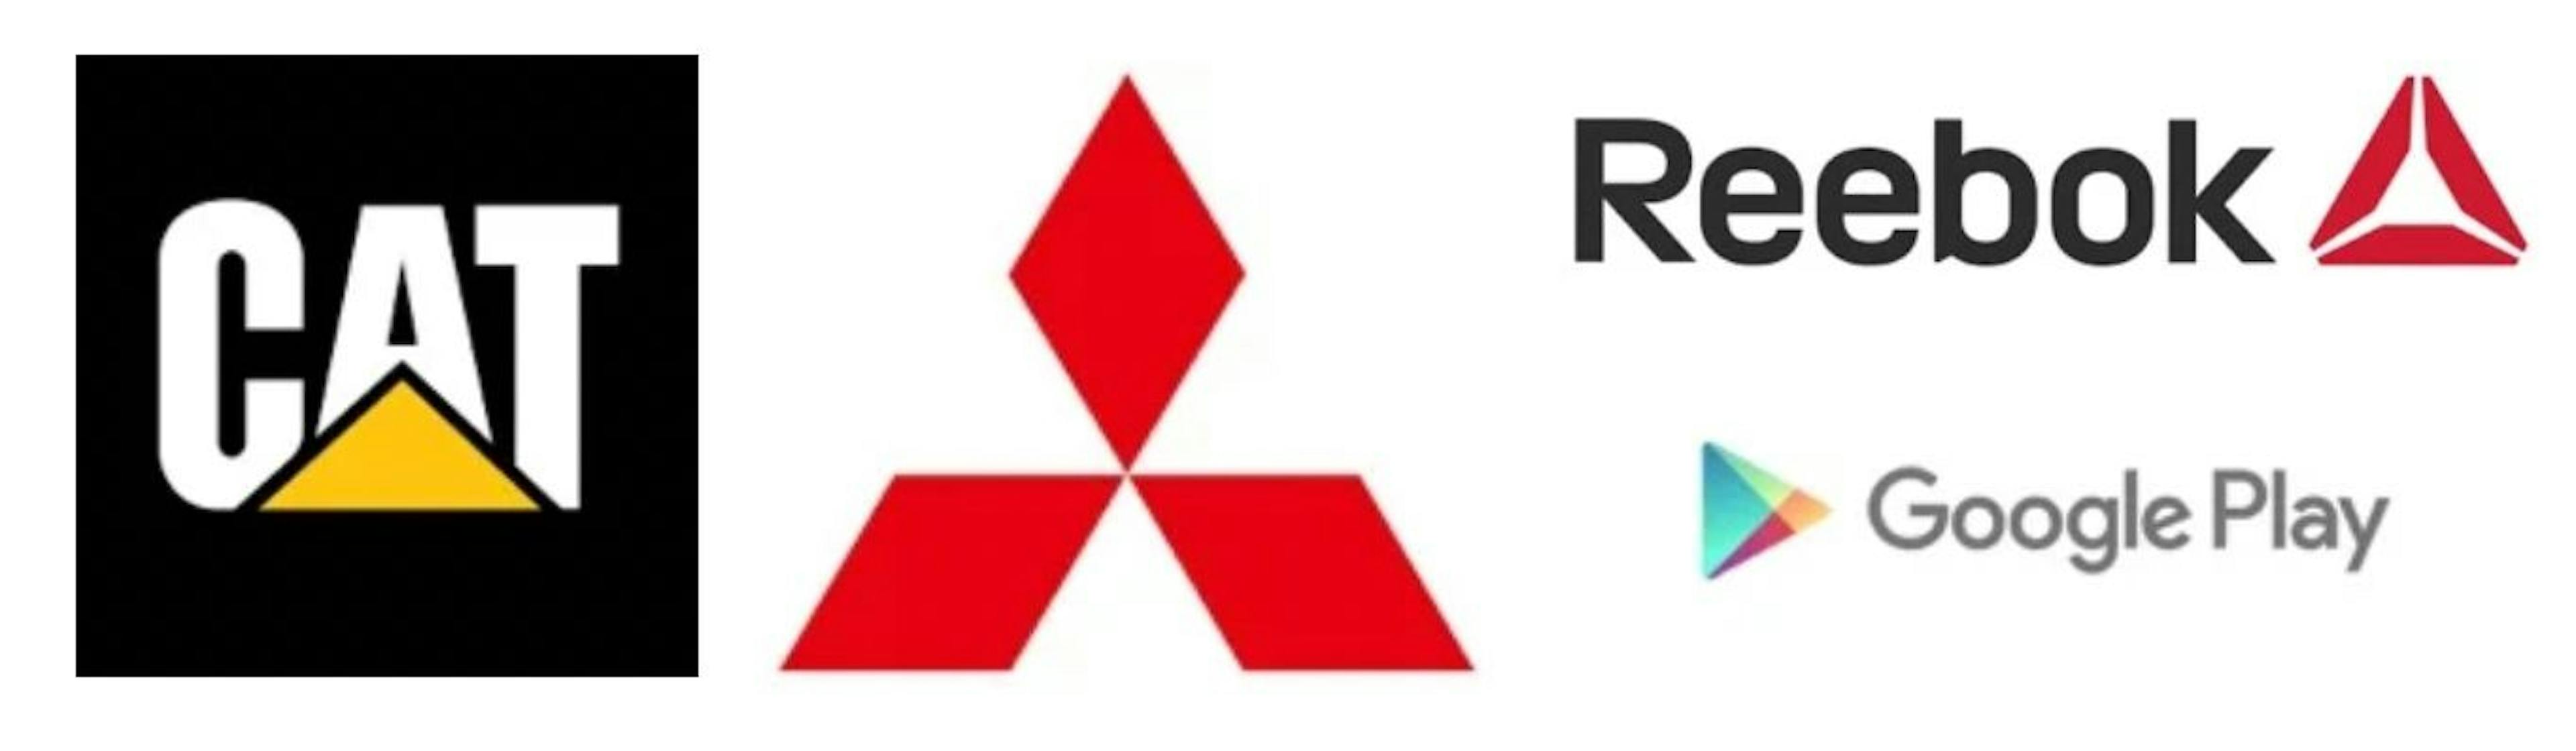 Triangular logos